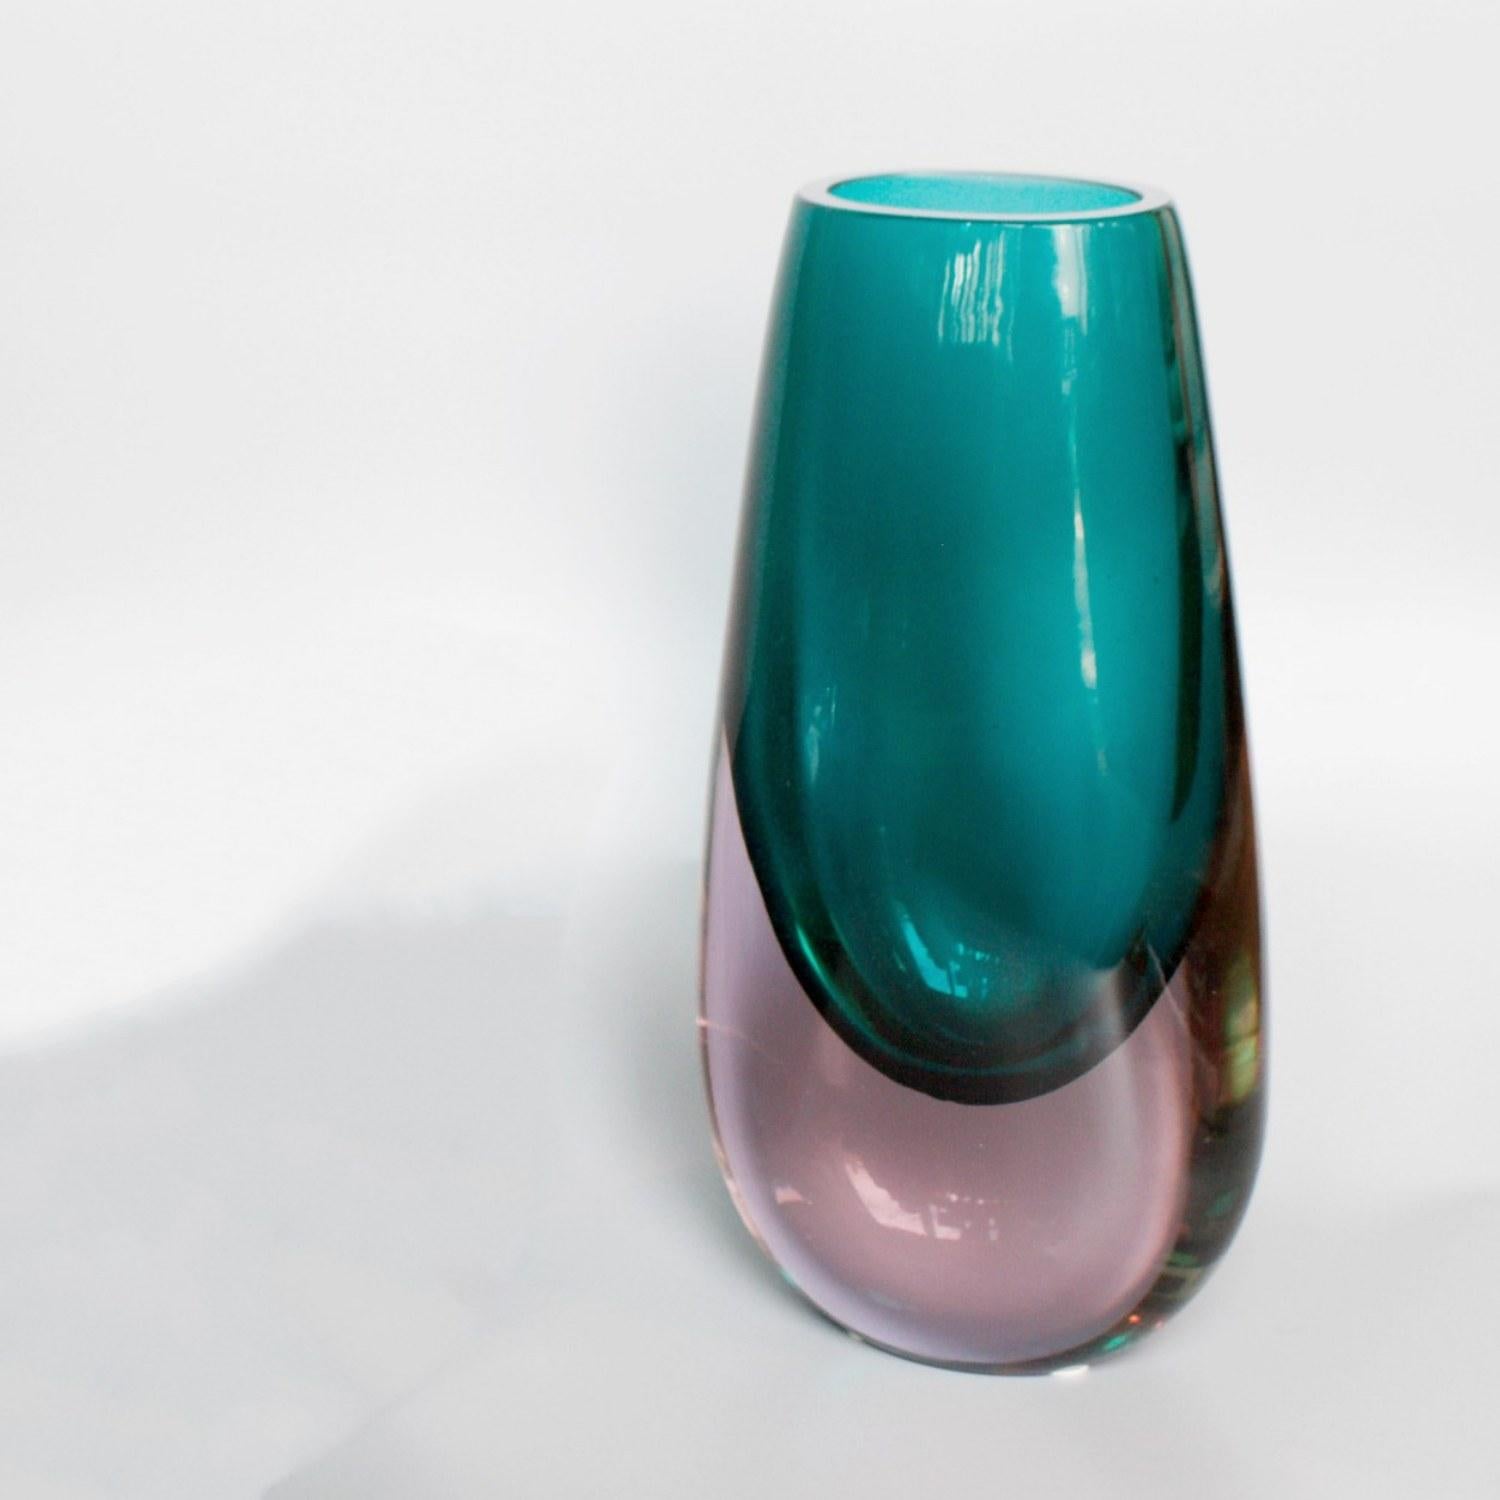 A lavender and green glass Murano vase by glass master Fabio Tosi & Antonio da Ros for Ars Cendese glass company in Murano, Italy.

Dimensions: H 32cm, W 15cm, D 7.5cm

Origin: Italy

Date: circa 1960

Gino Cenedese (1907-1973) established